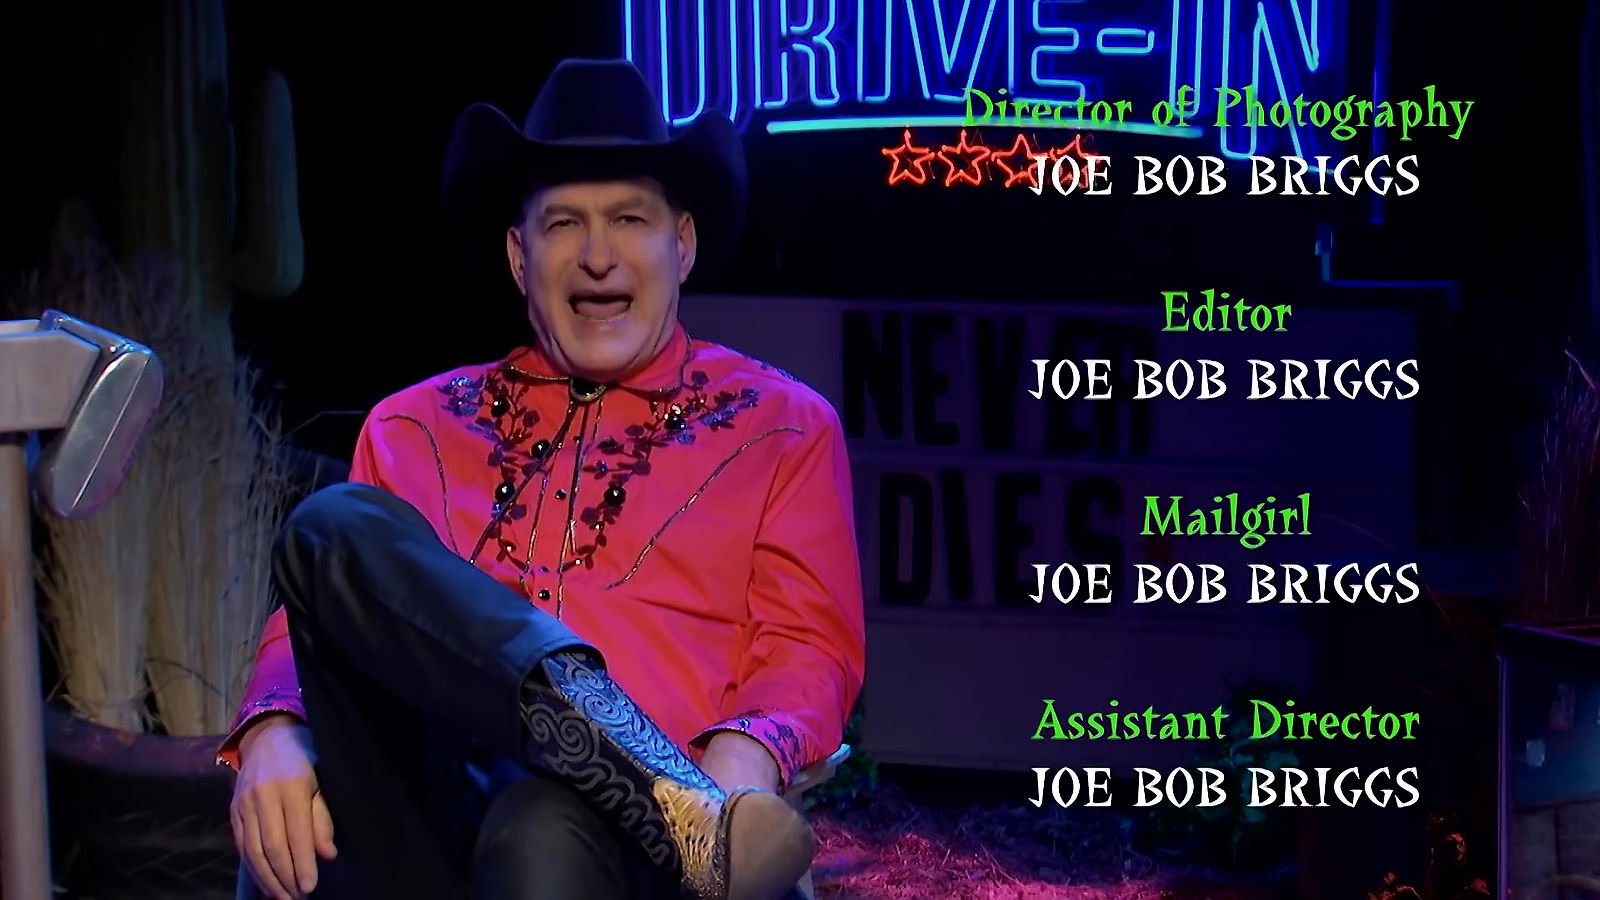 The Last Drive-In with Joe Bob Briggs Series - Official Trailer [HD] A Shudder Original Series